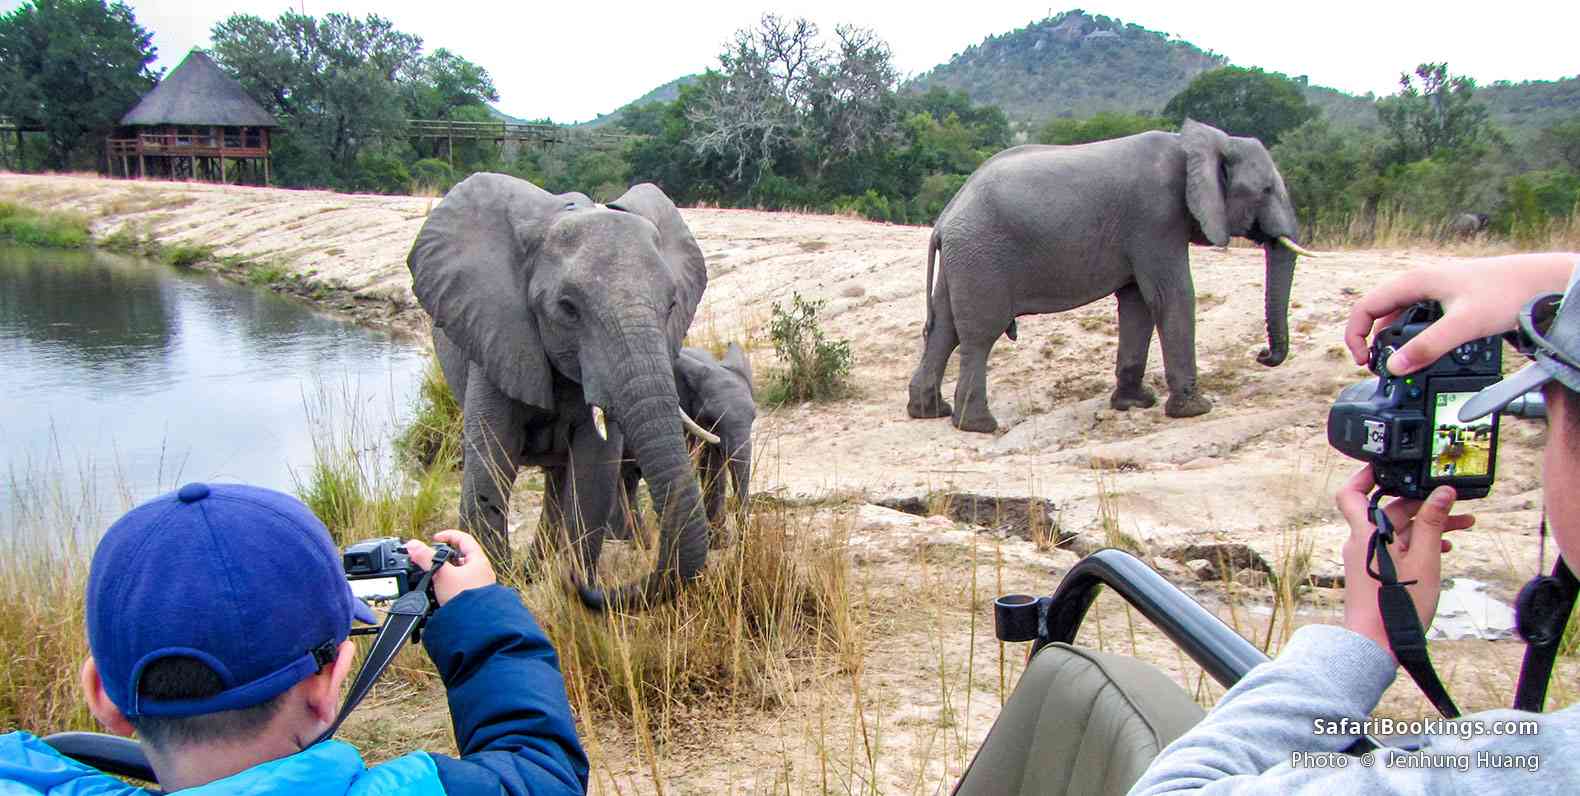 Tourists taking photos of elephants